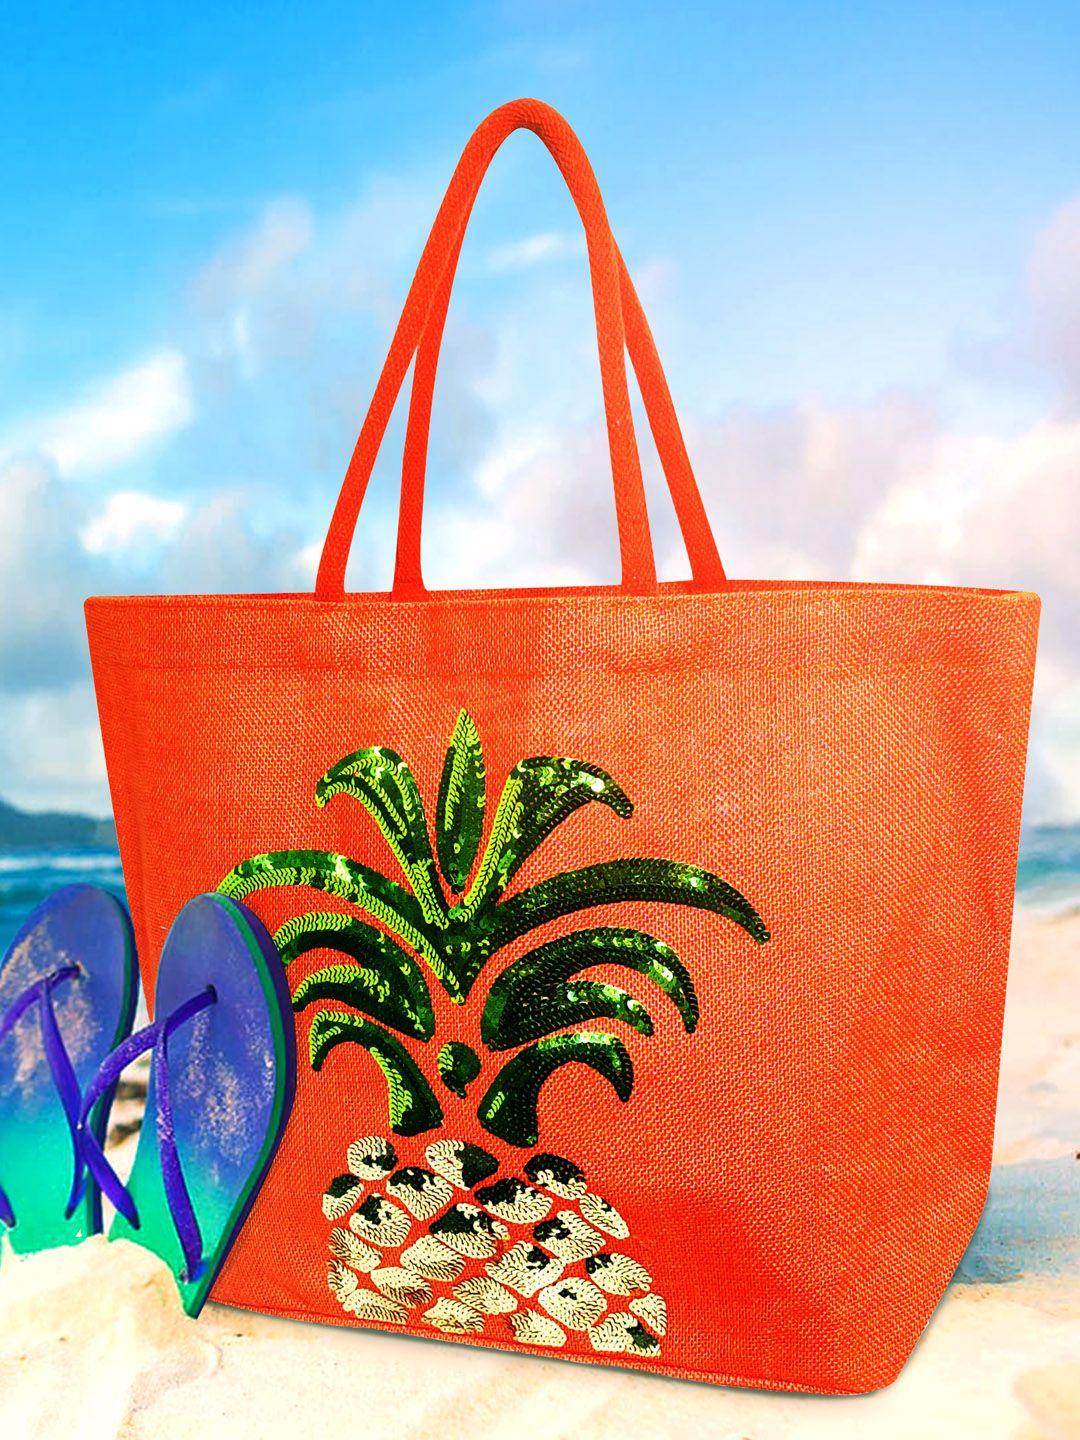 earthbags embellished oversized shopper tote bag